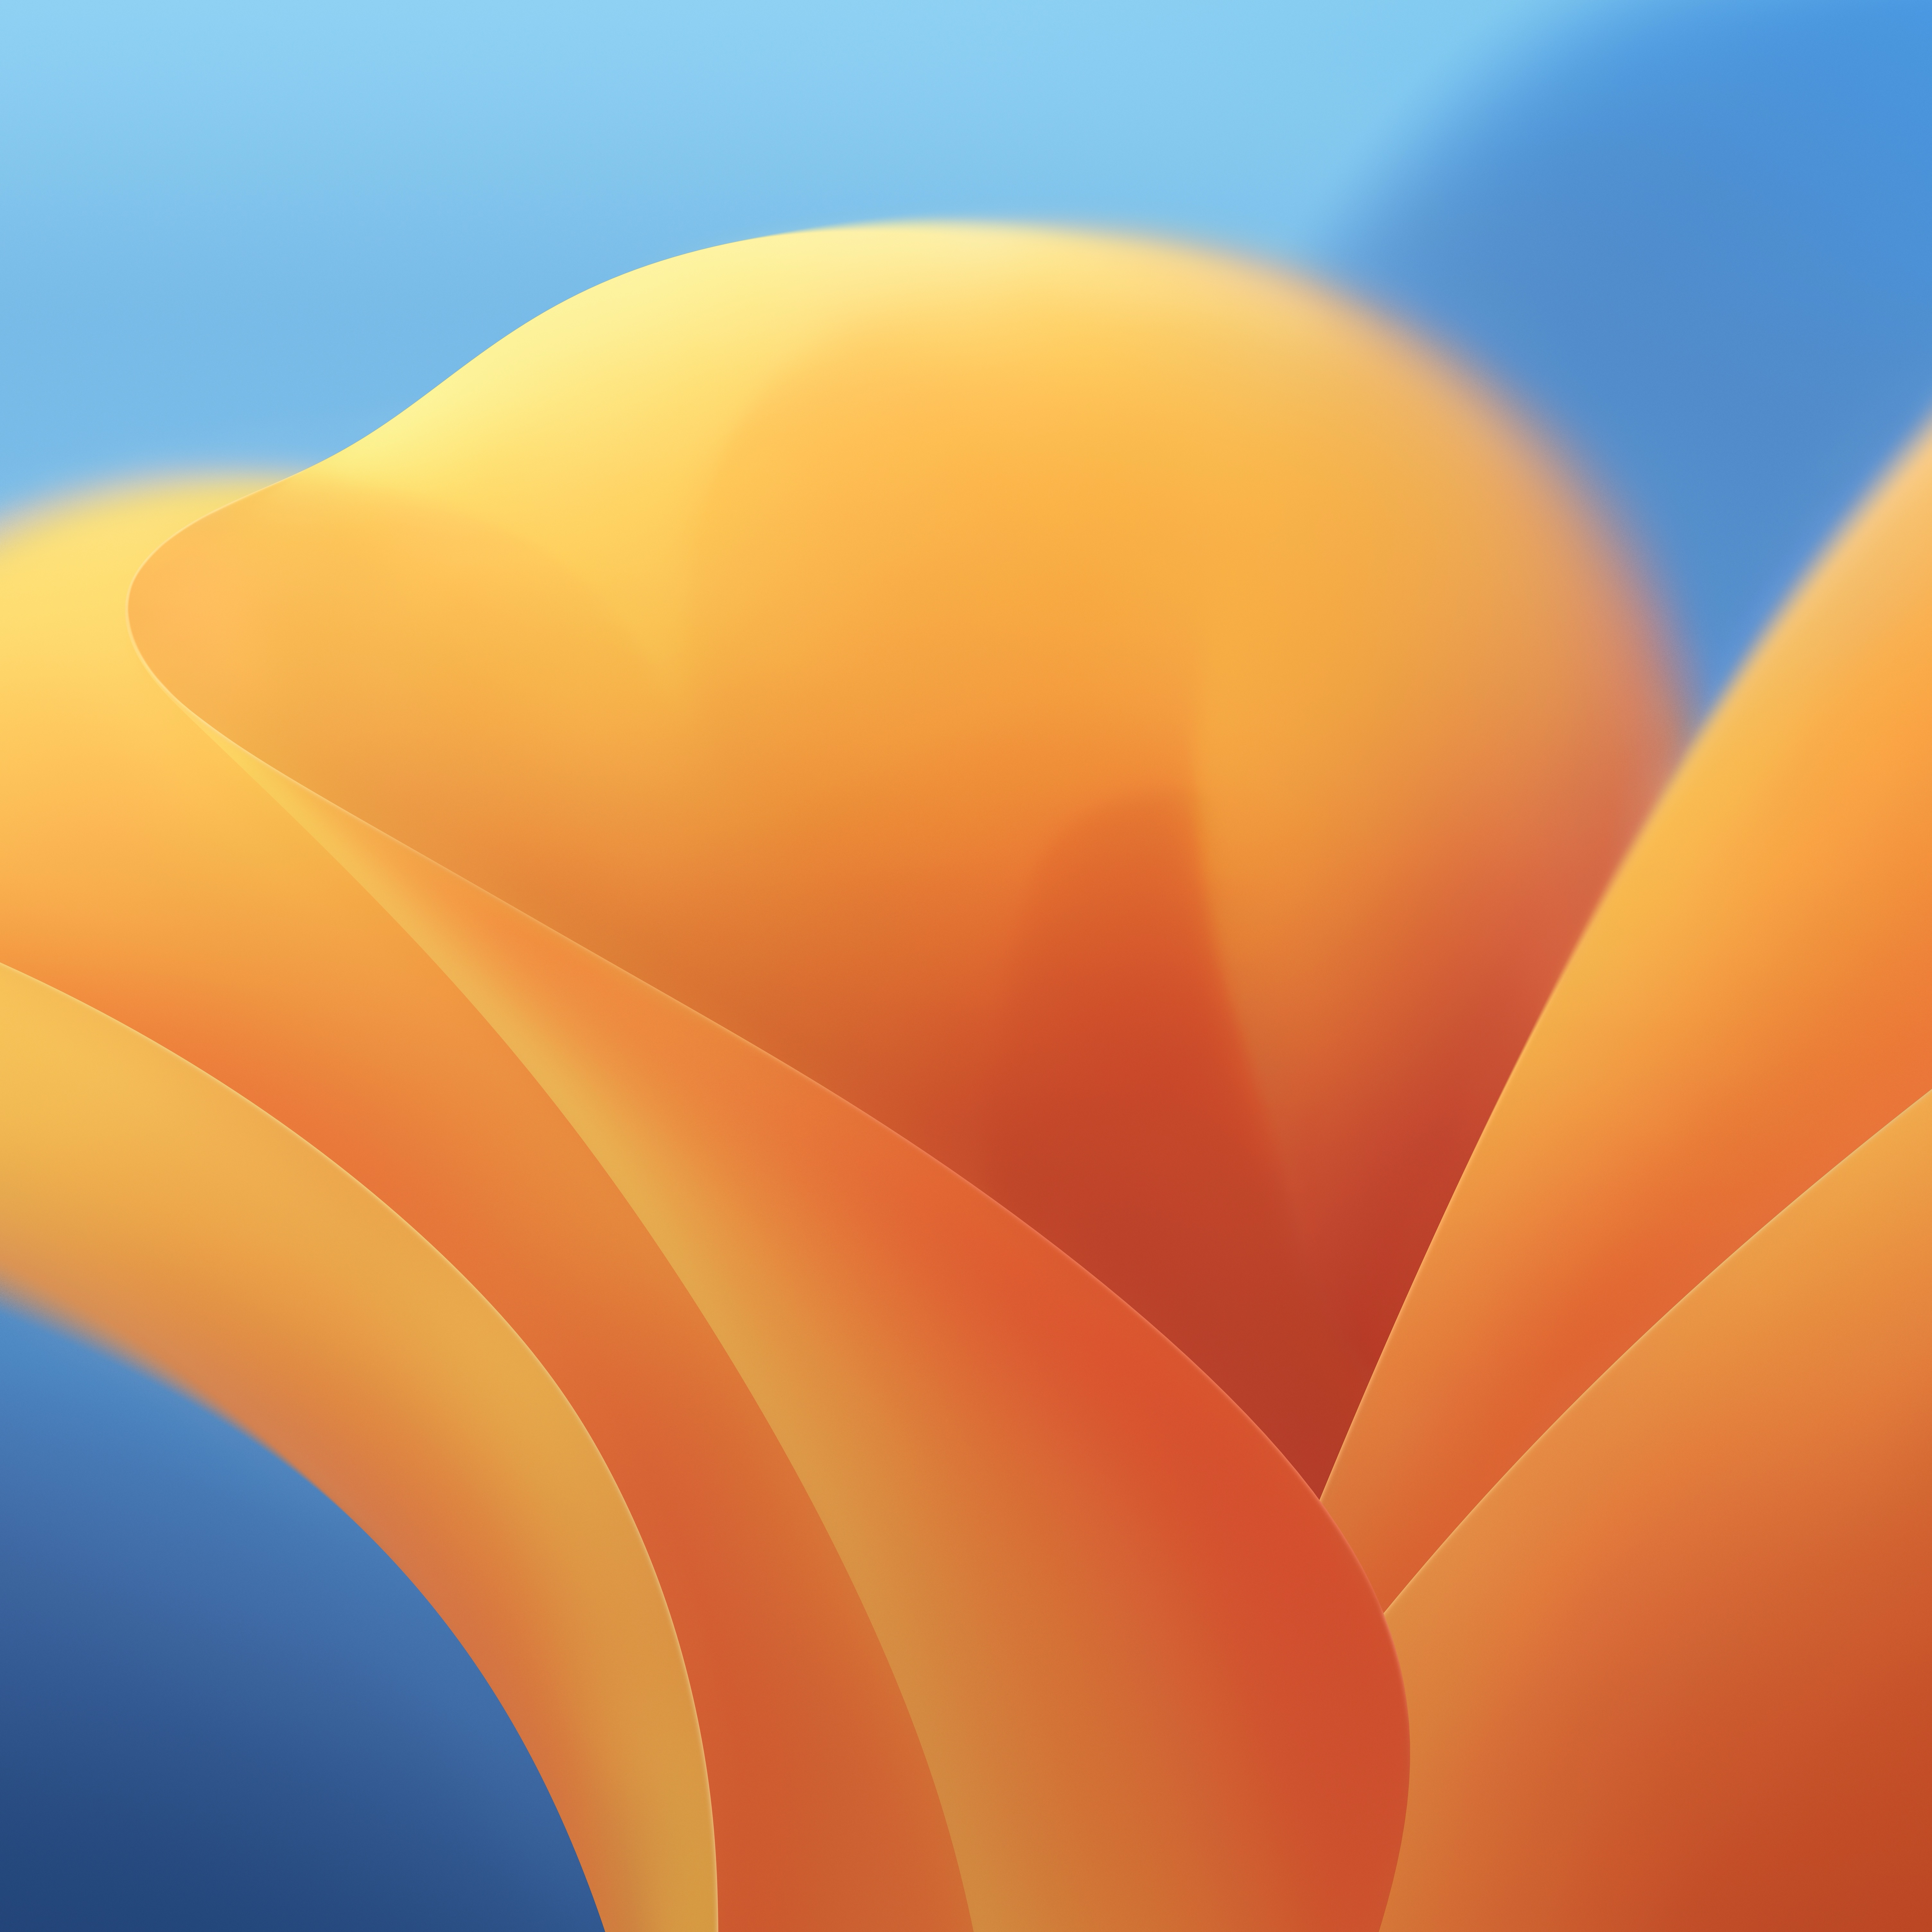 Download the new macOS 13 Ventura wallpaper - 9to5Mac